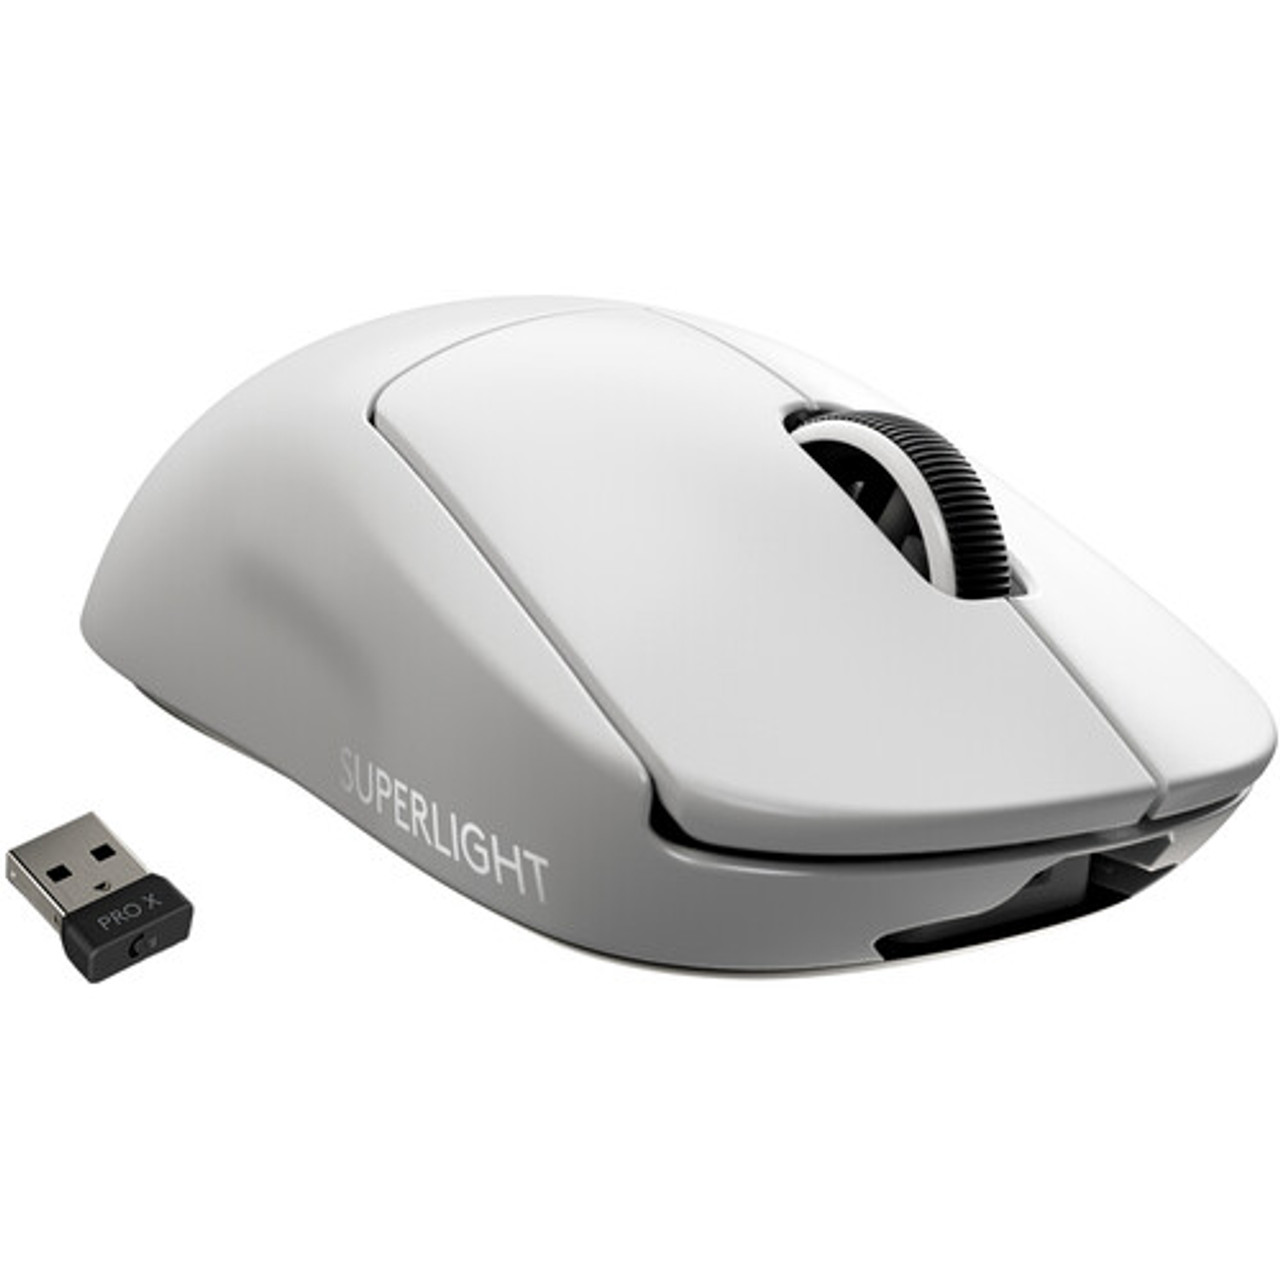 Logitech G305 Lightspeed Wireless Gaming Mouse - Lilac - 910